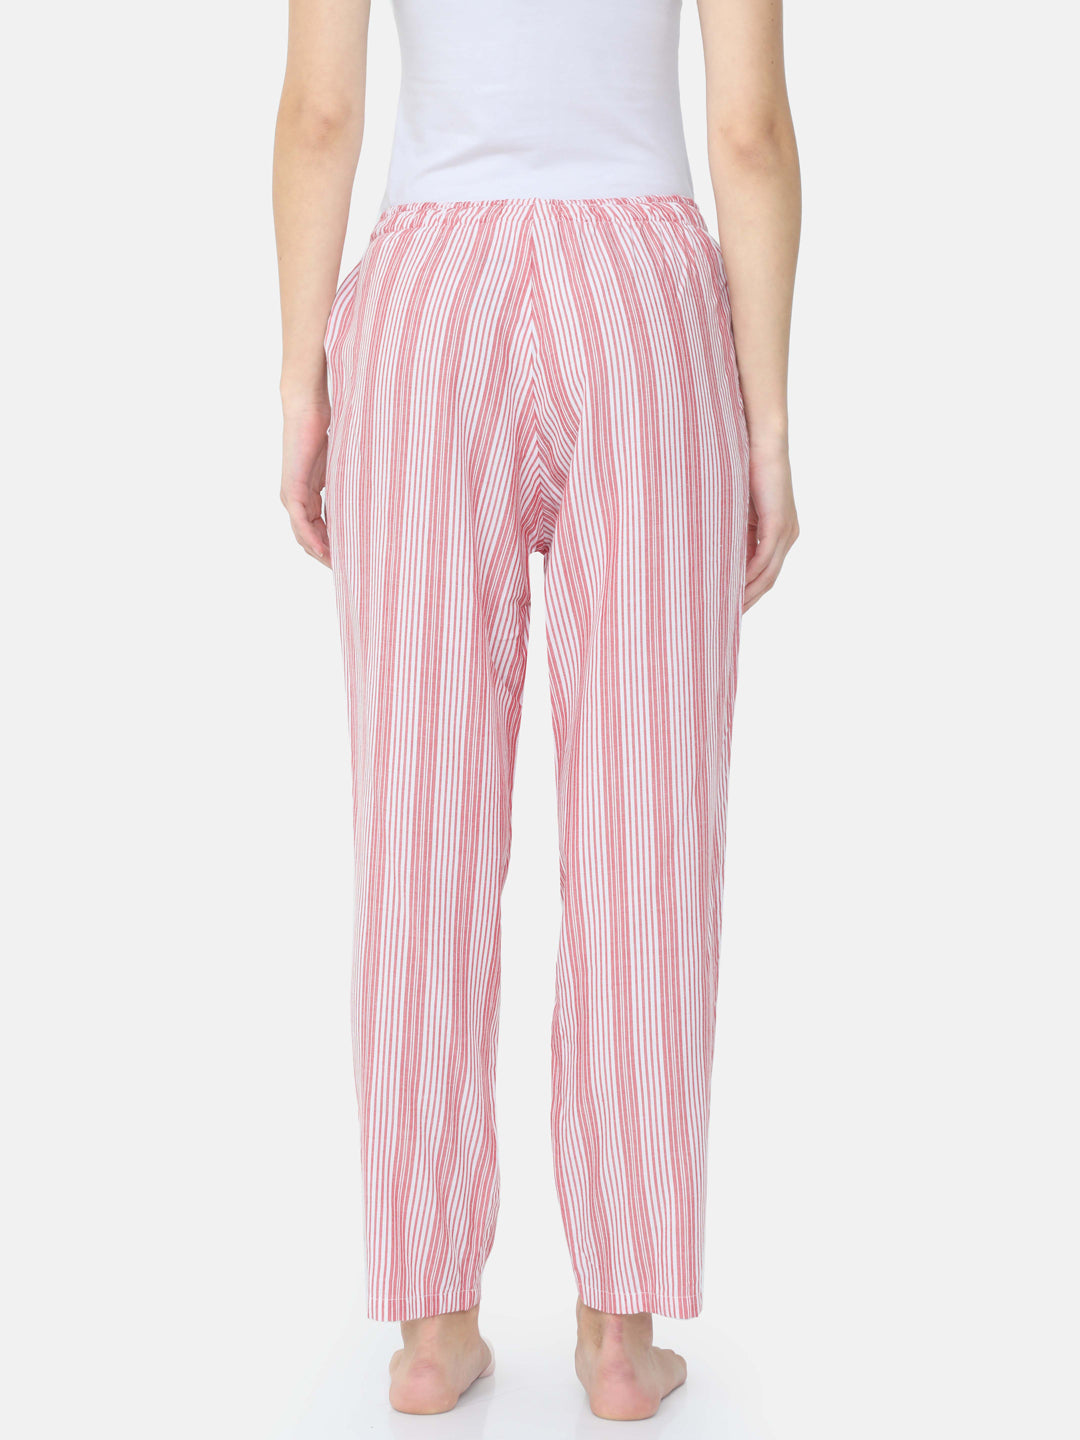 The Be a Flamingo Women PJ Pants